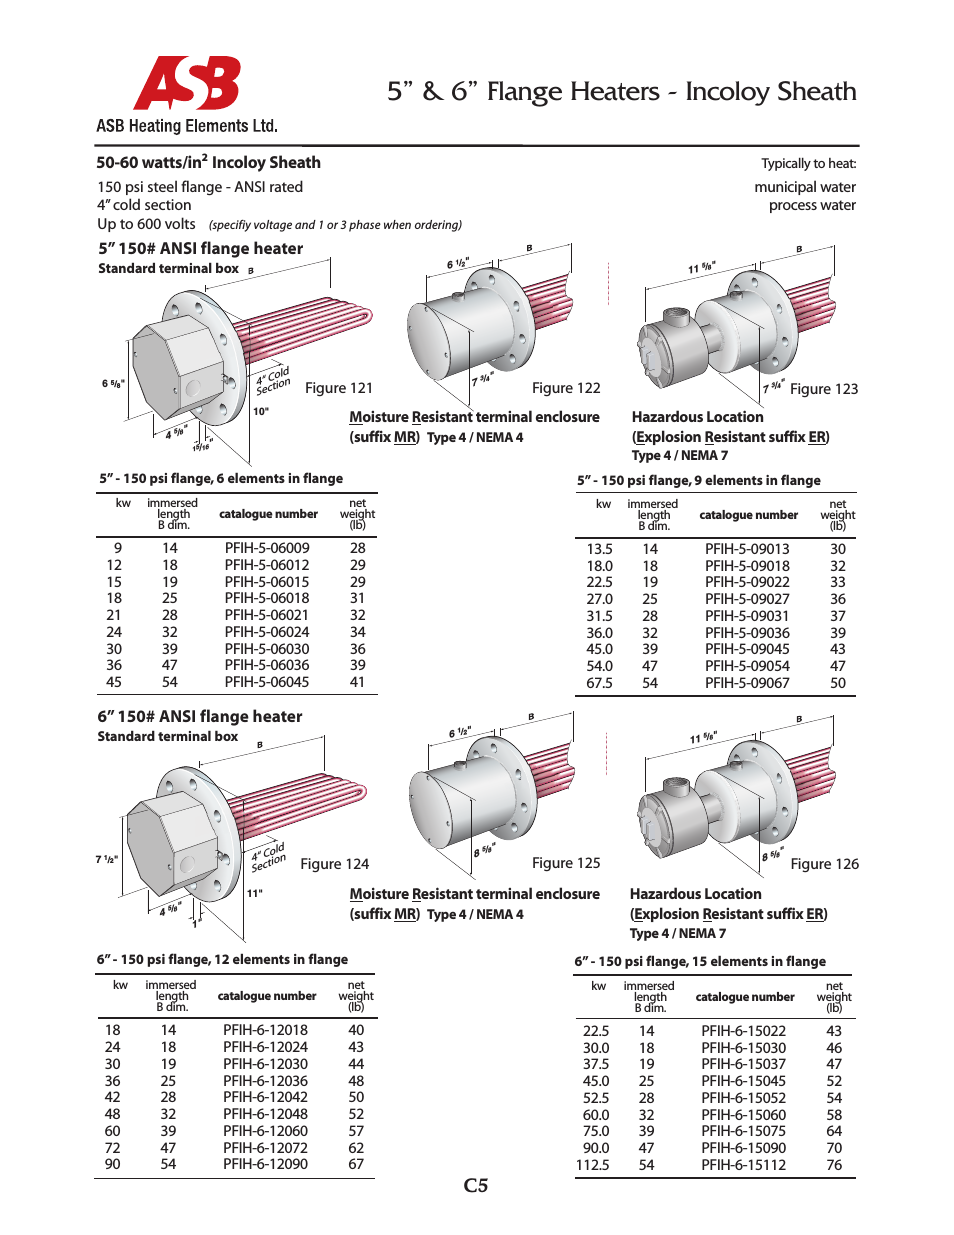 5” & 6” Flange Heaters - 50-60 watts - Incoloy Sheath